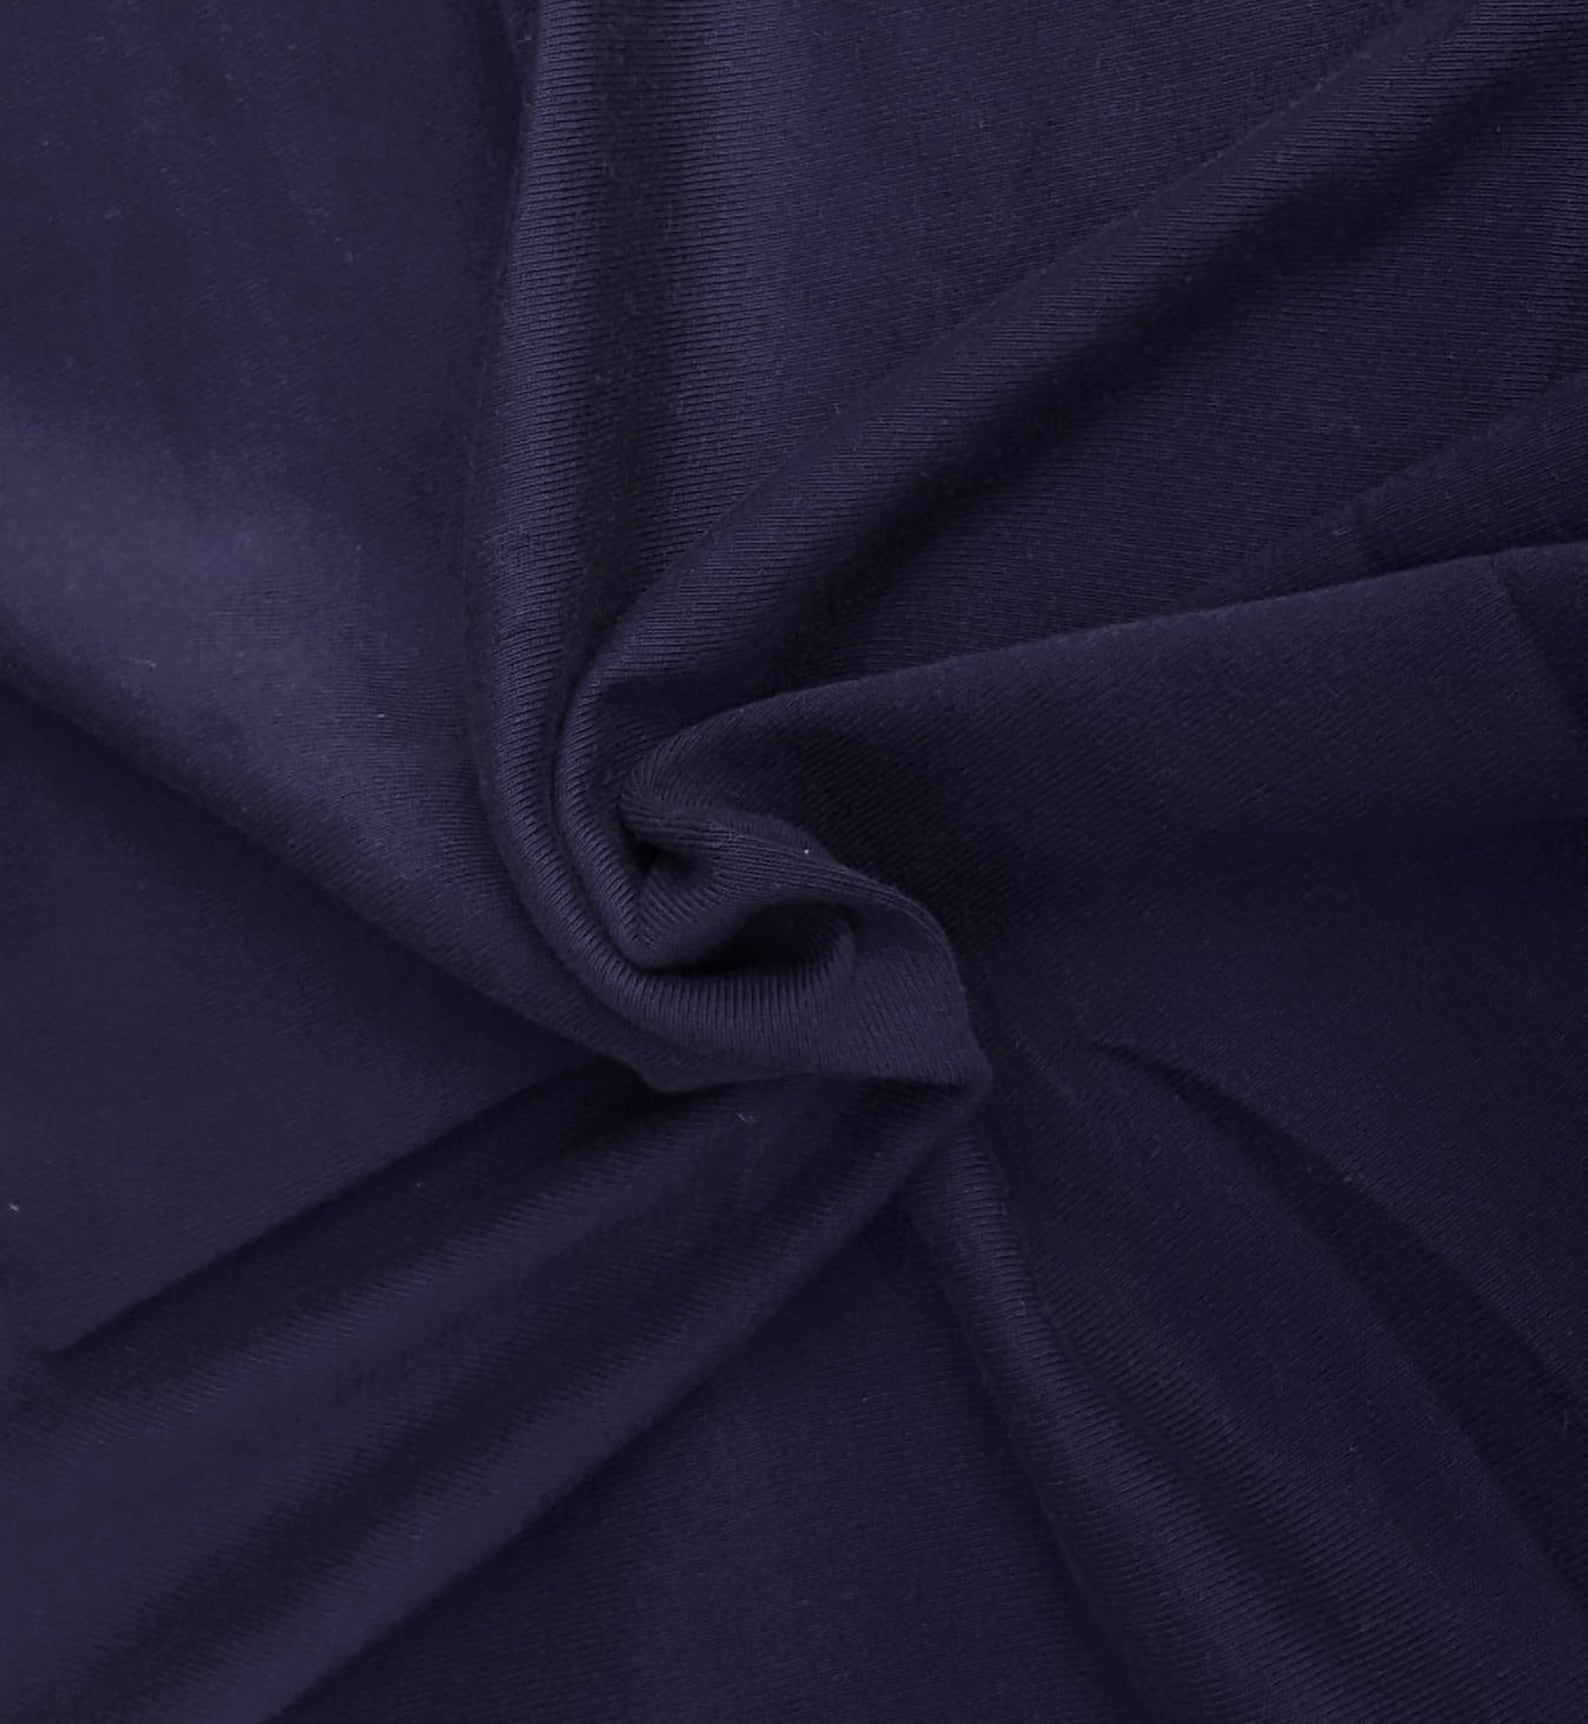 Navy Cotton Rib 1x1 Knit Fabric by Yard 11OZ. 12/13/17 | Etsy